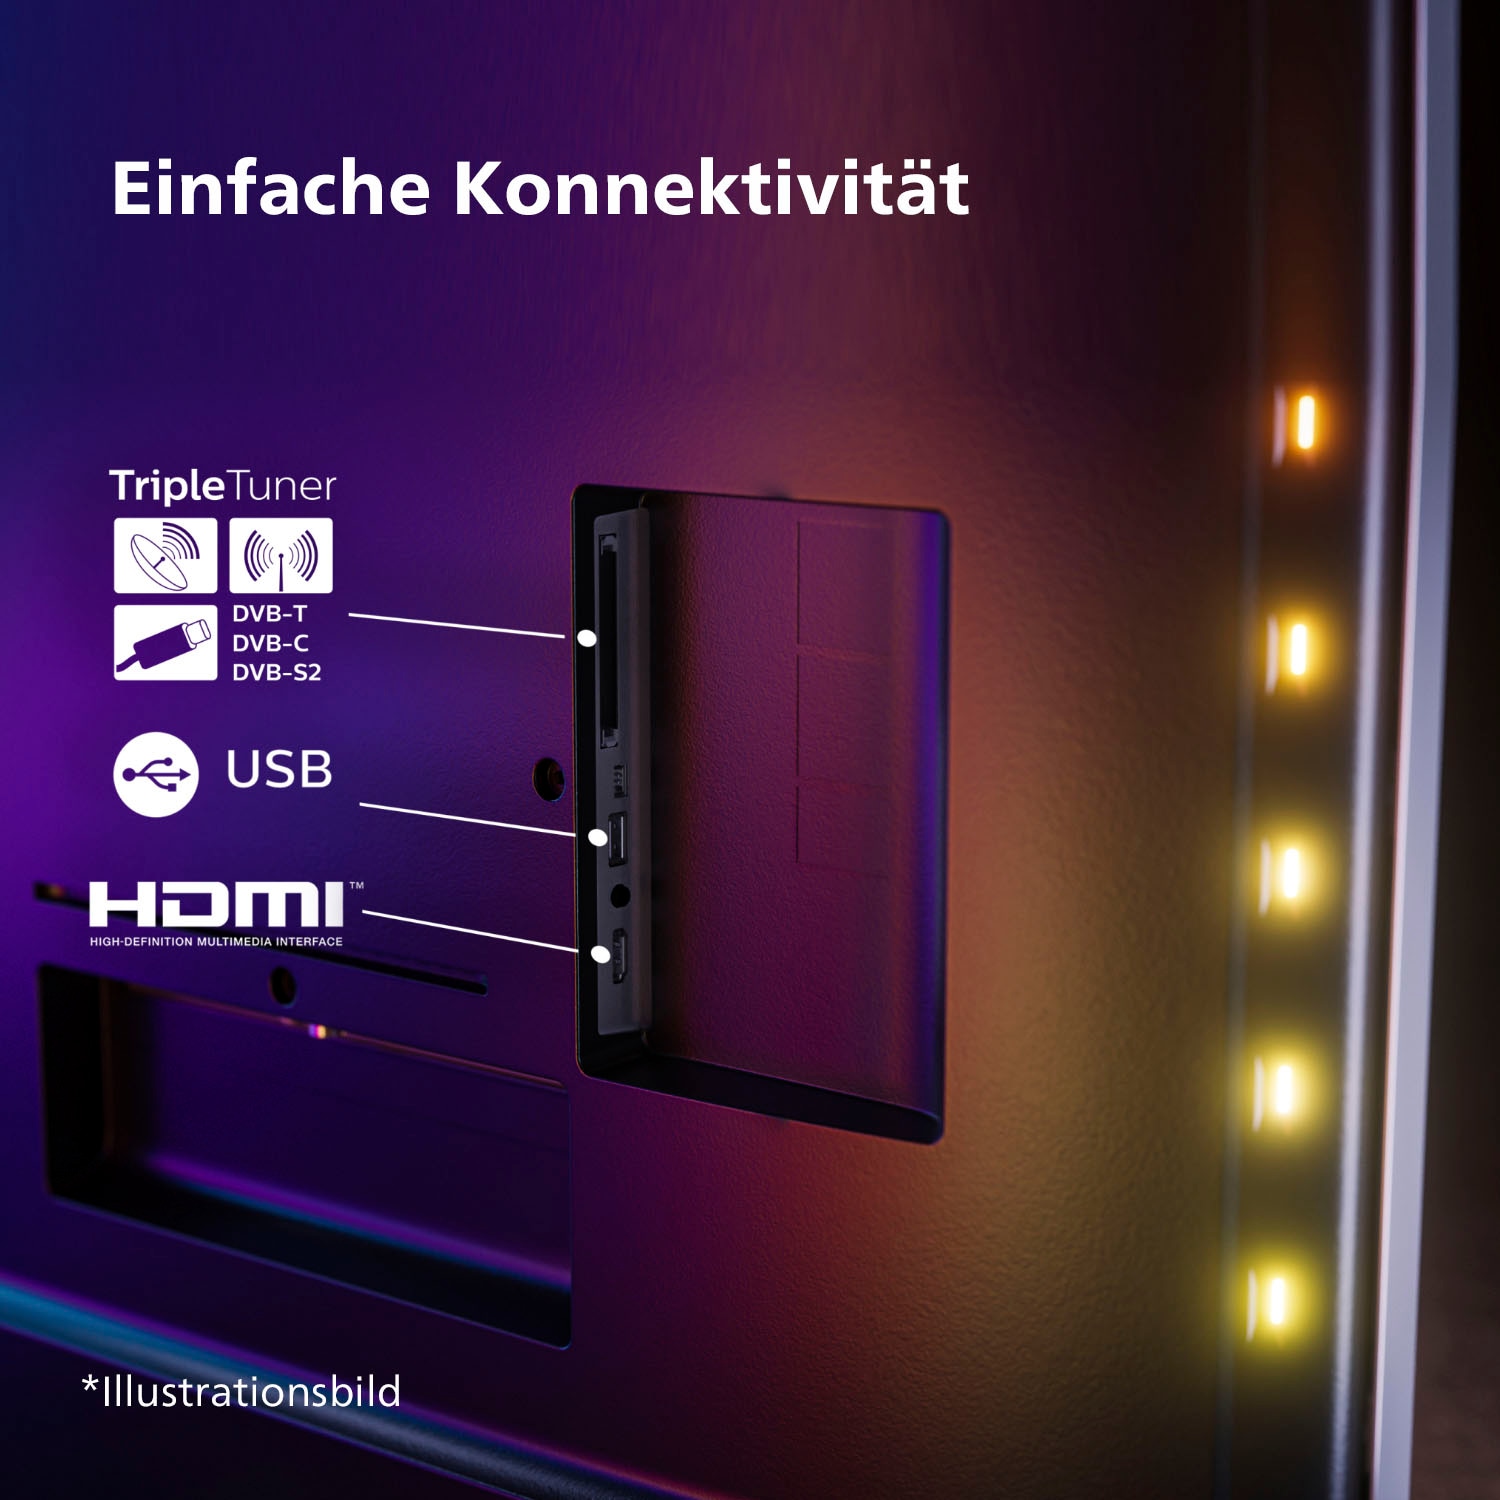 Philips LED-Fernseher, 126 cm/50 Zoll, 4K Ultra HD, Smart-TV